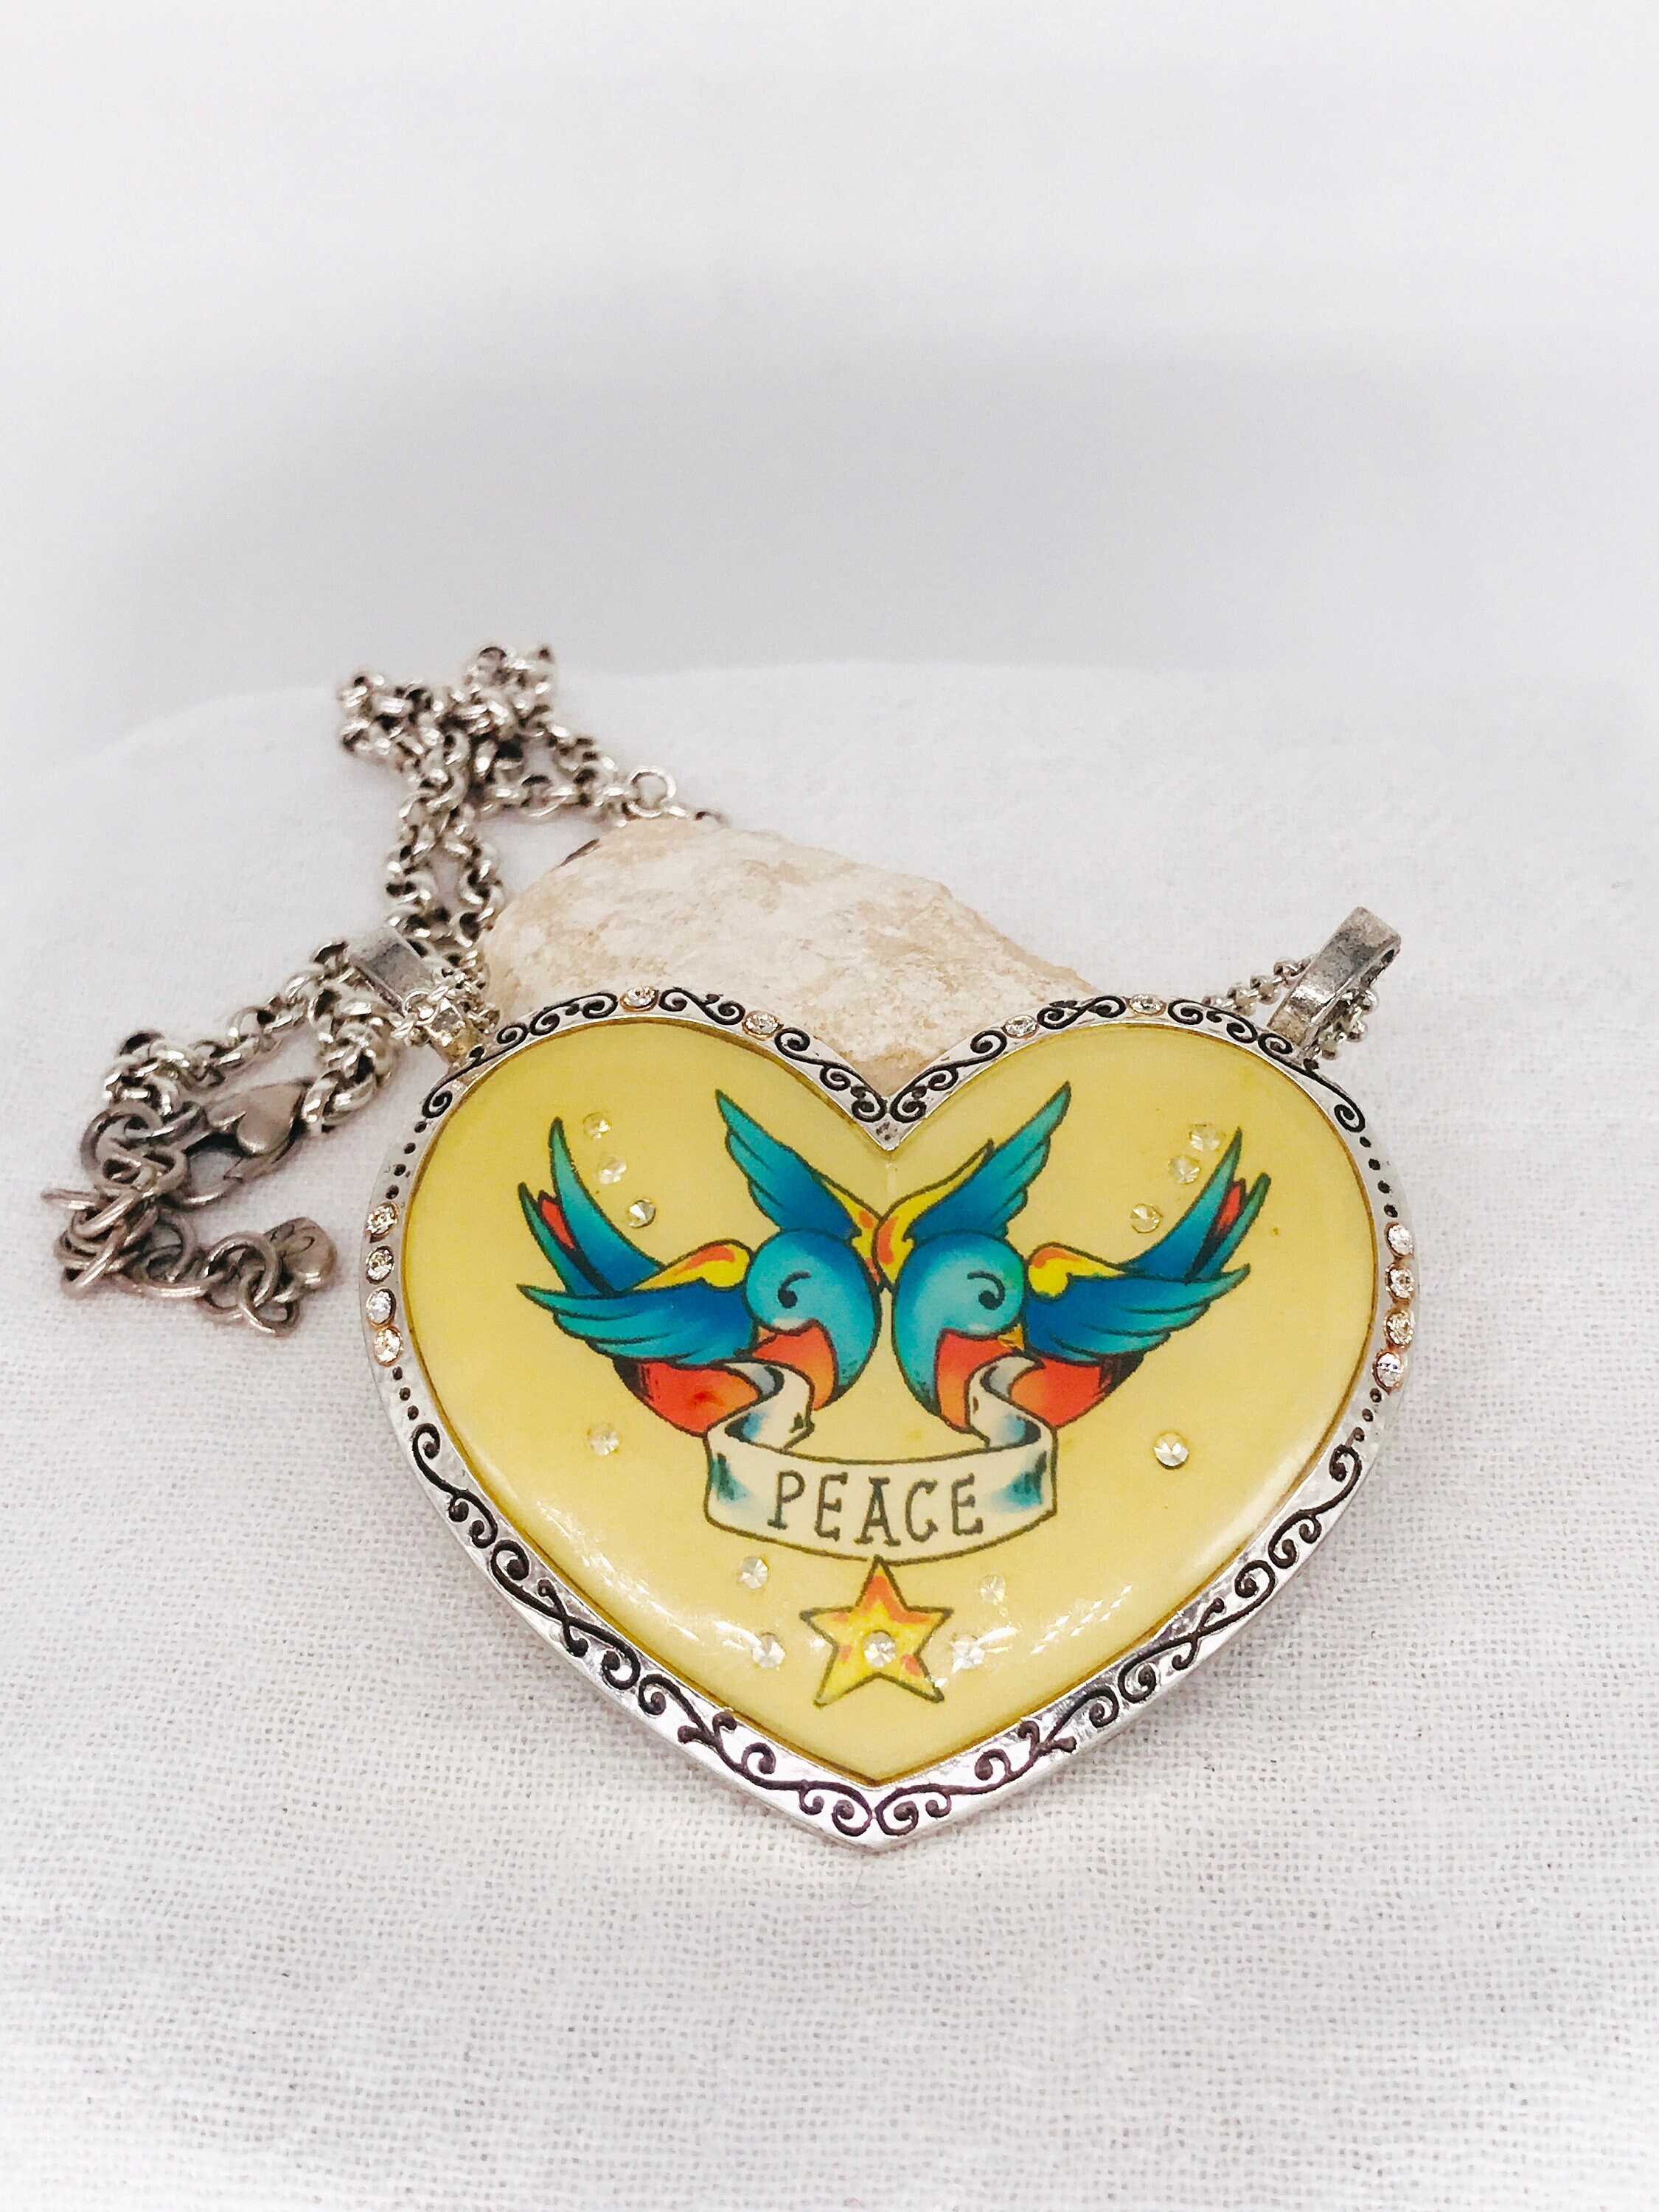 Emblem Love Necklace - Brighton